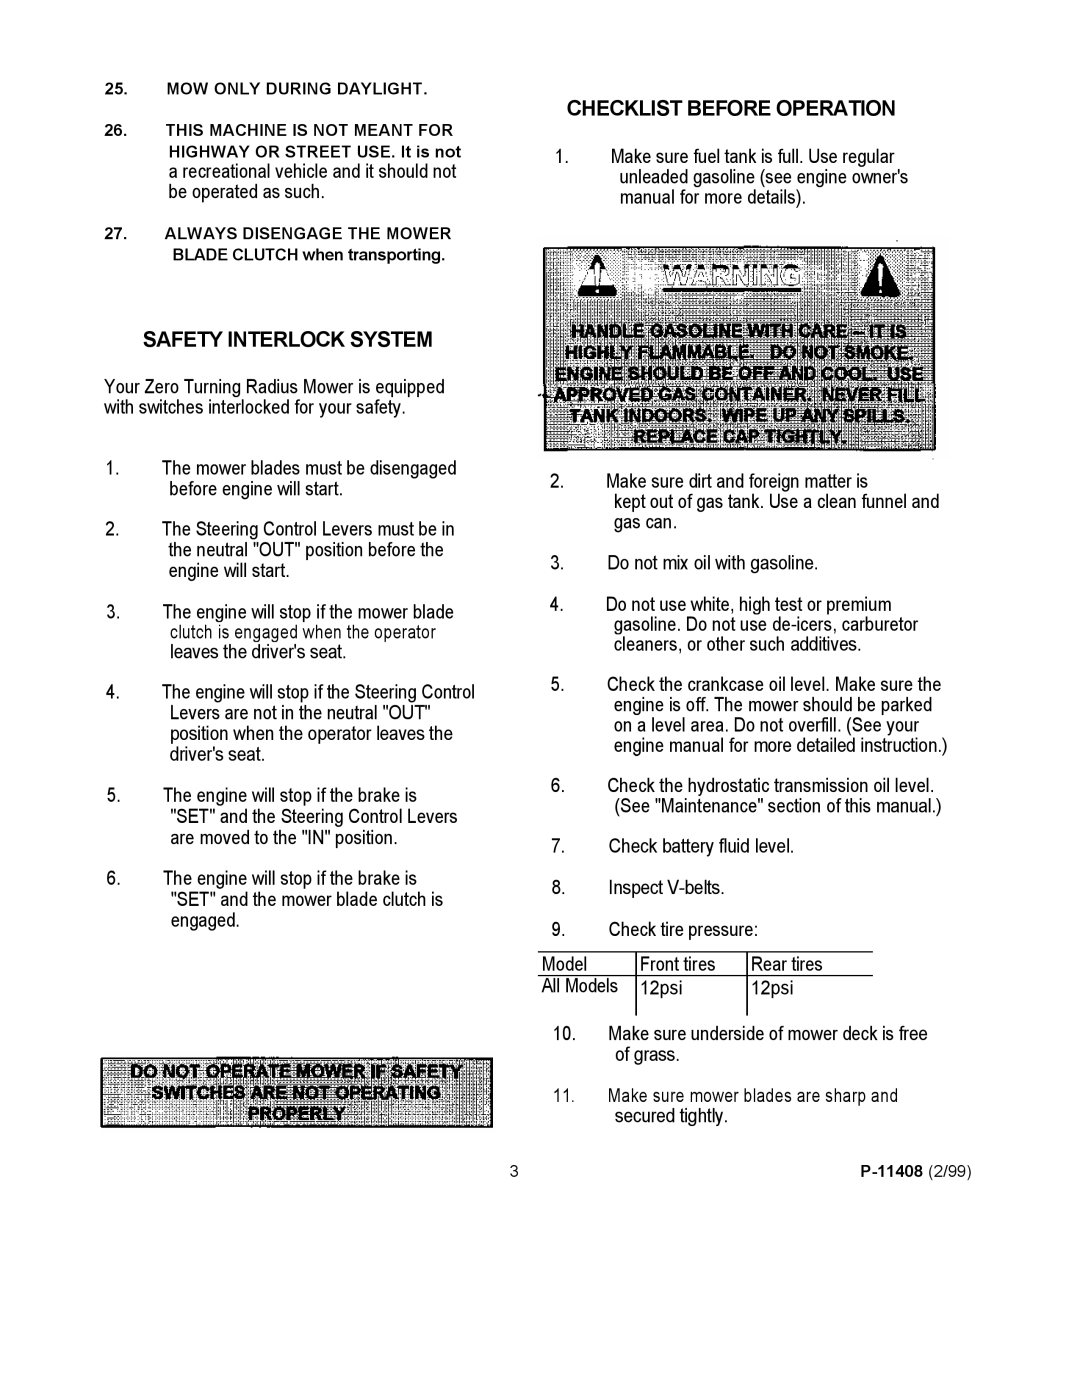 Dixon 700 Series manual Safety Interlock System, Checklist Before Operation 